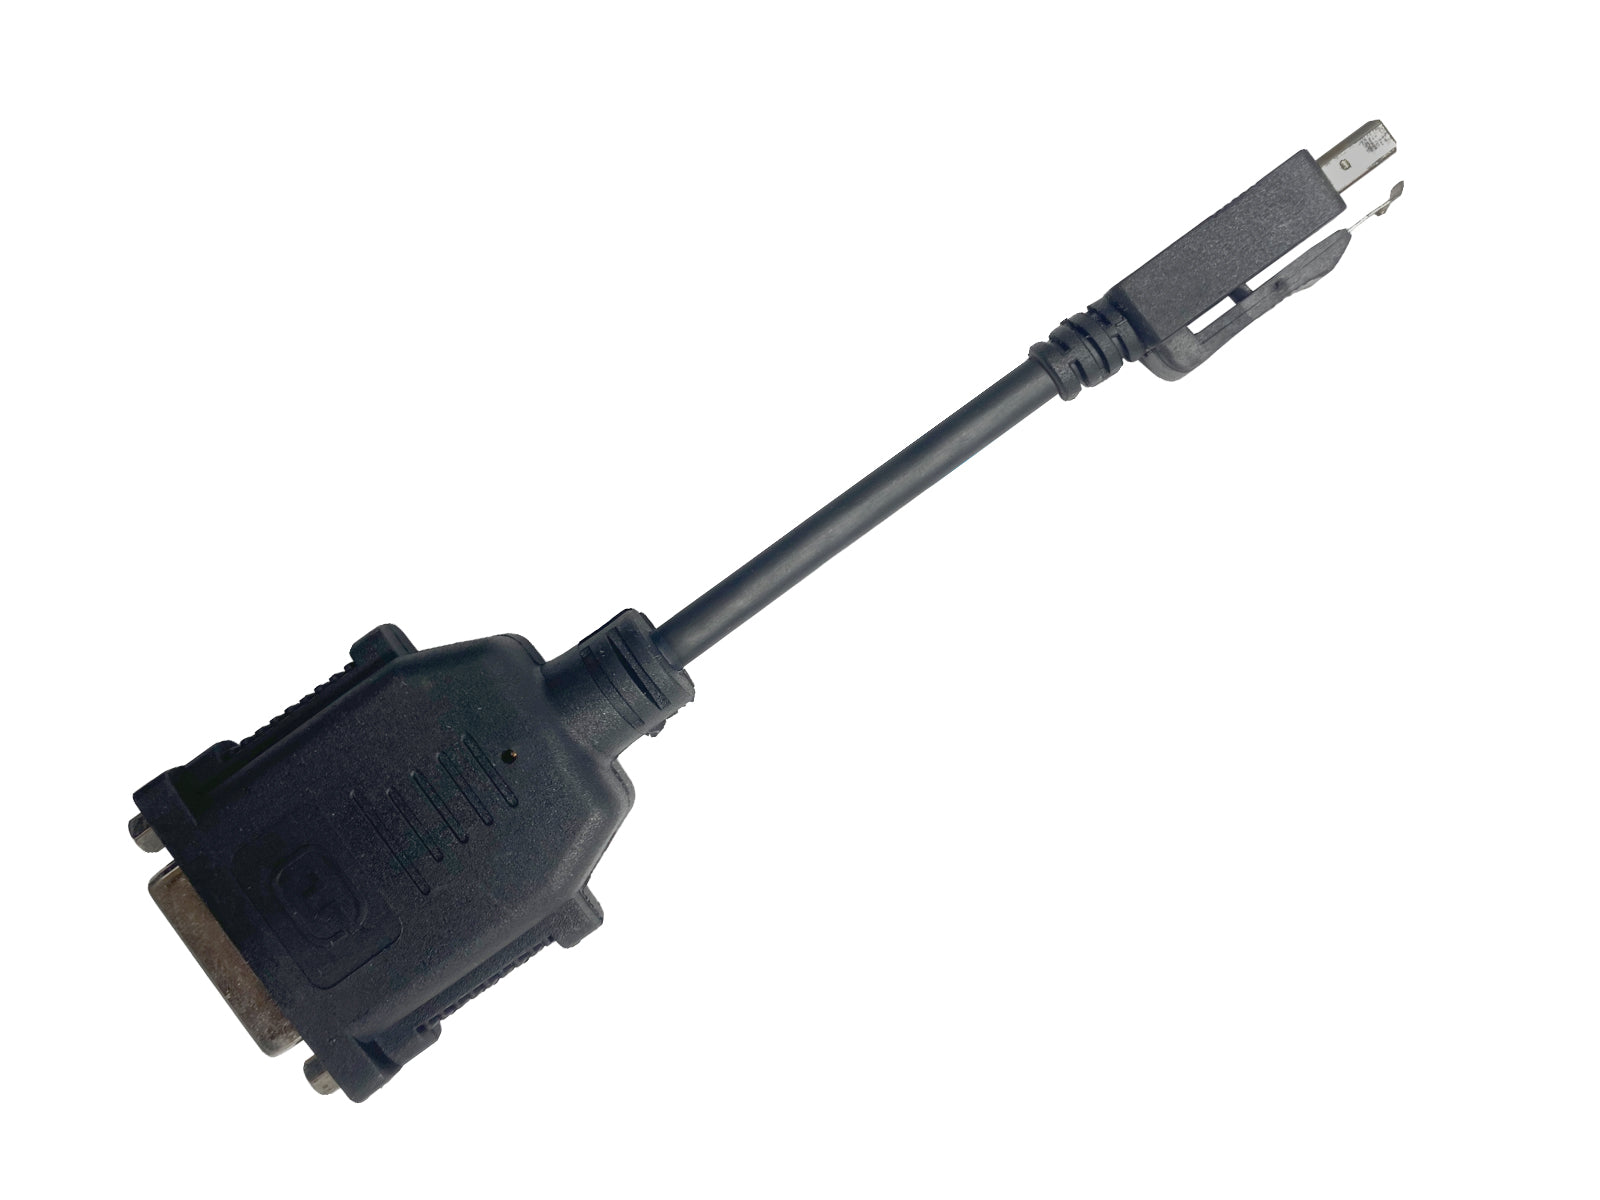 PNY Mini DisplayPort - DVI 비디오 신호 어댑터 변환기(91008580) Monitors.com